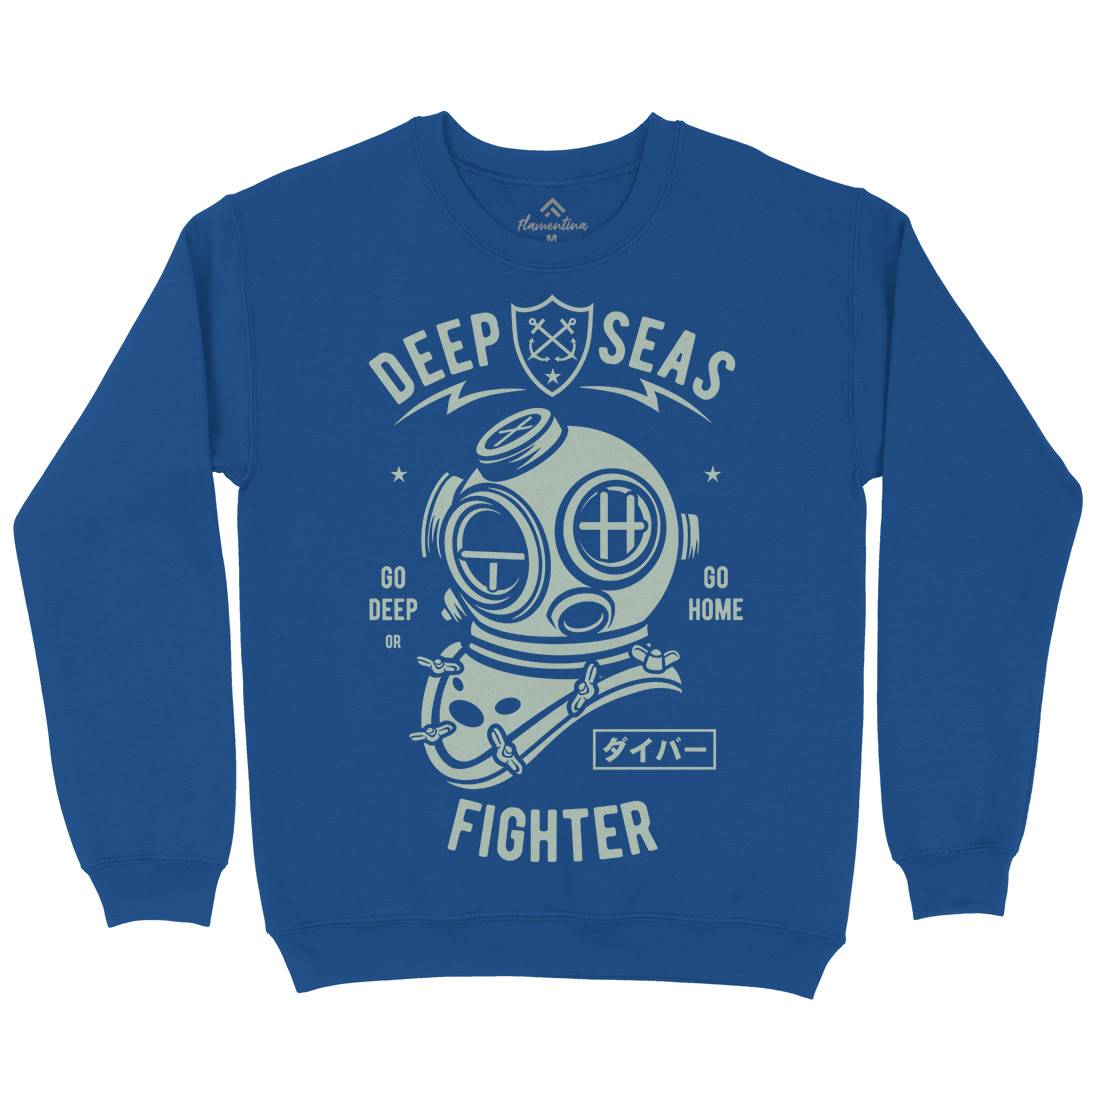 Deep Seas Fighter Kids Crew Neck Sweatshirt Navy A223